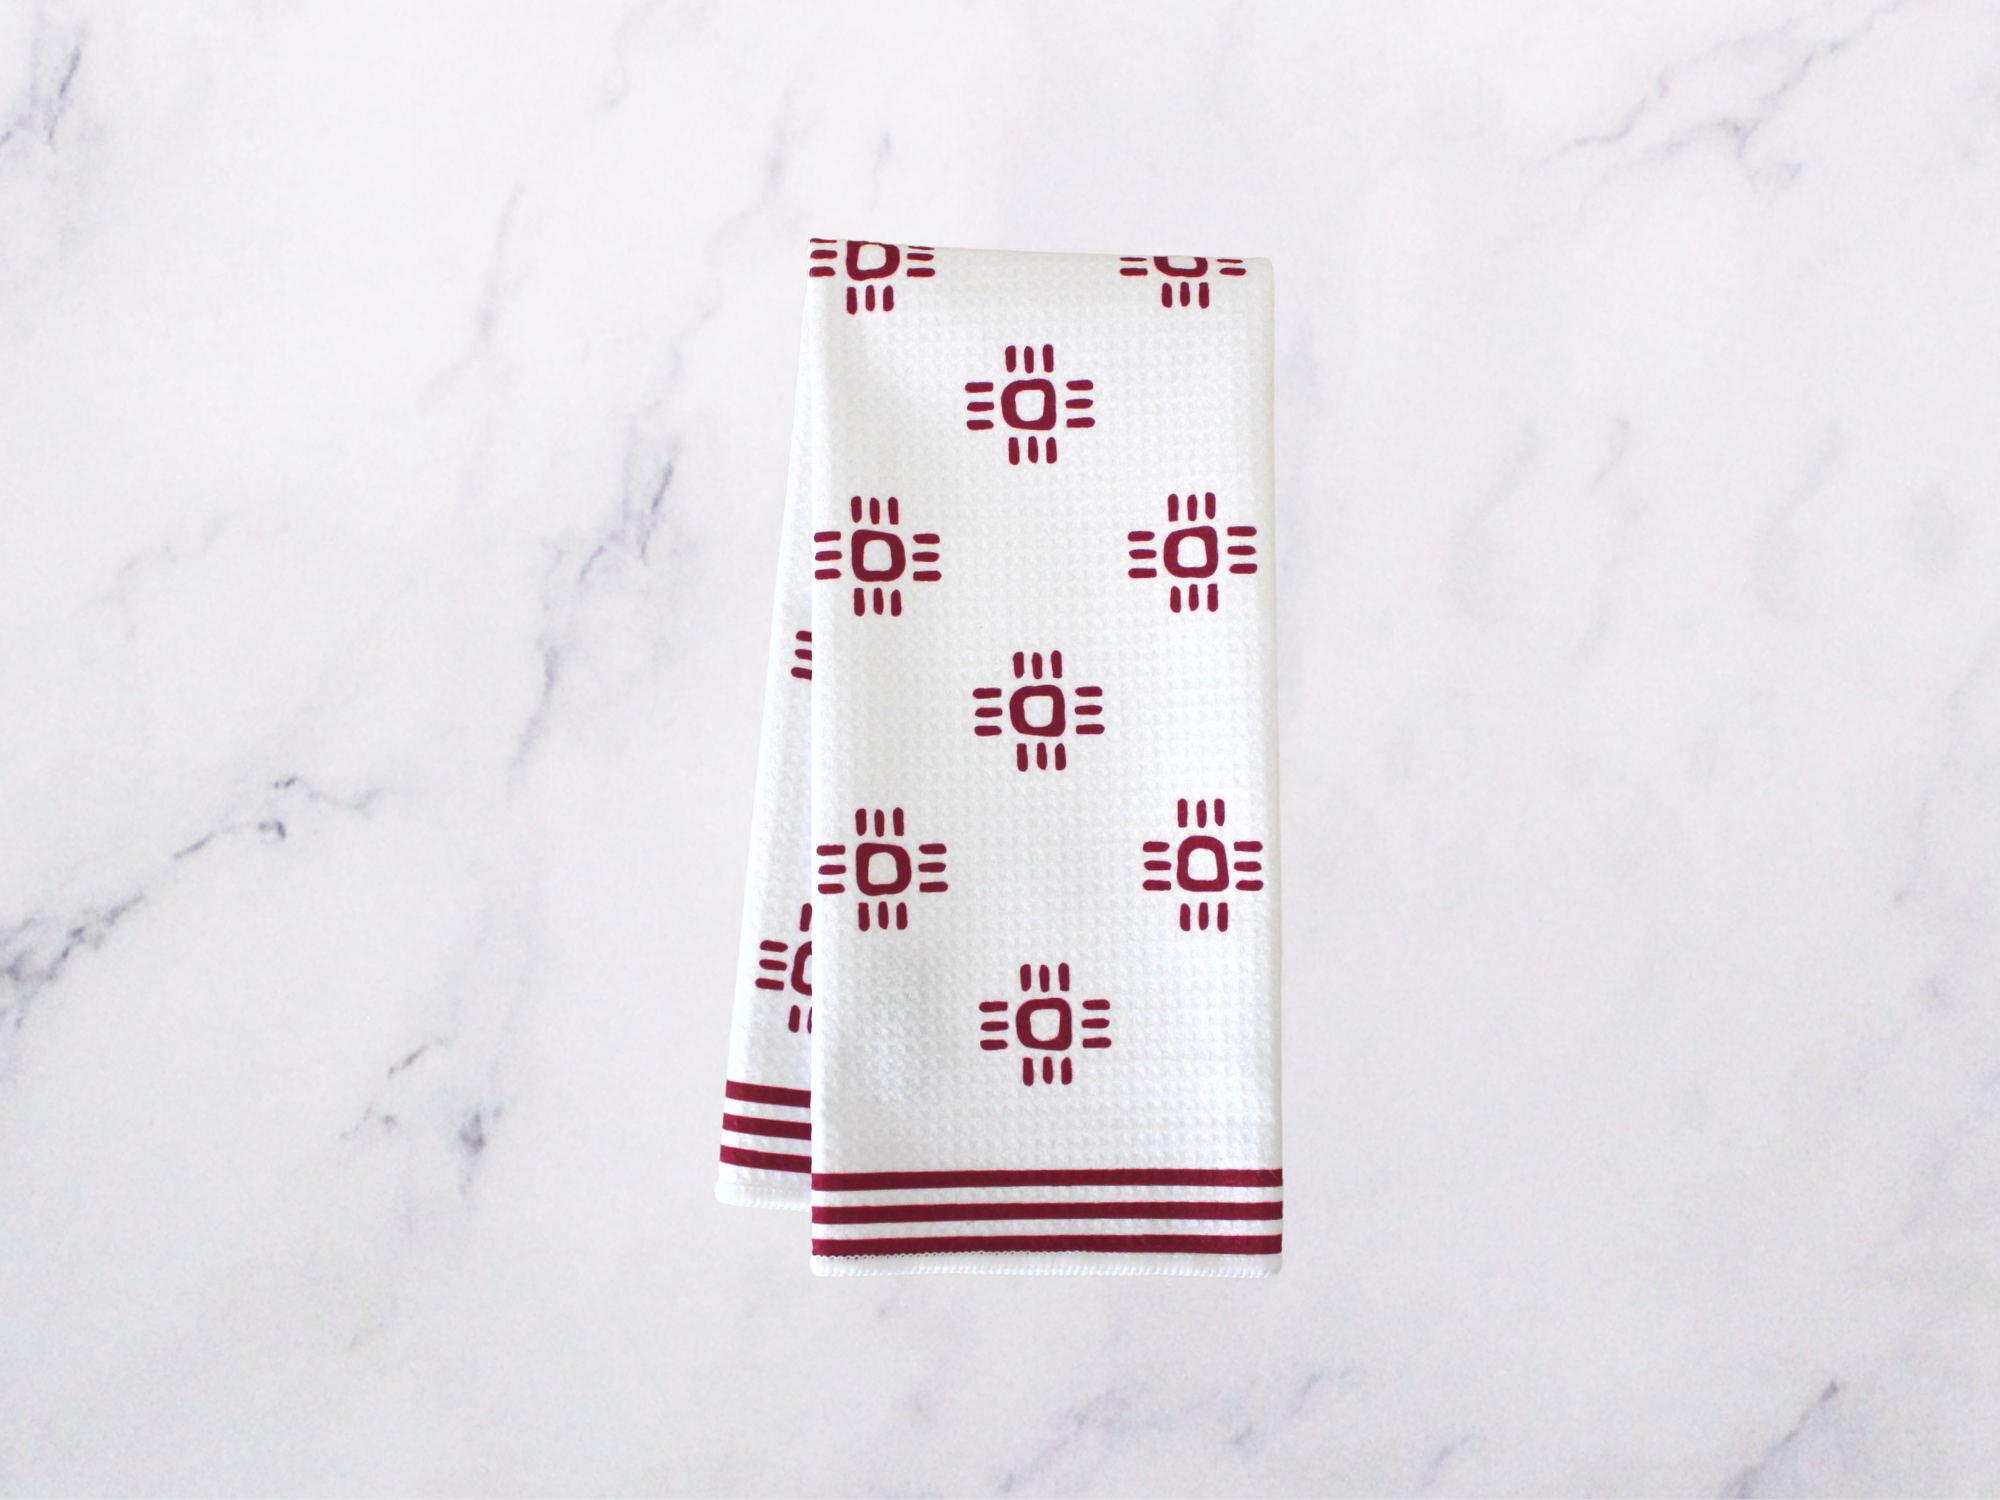 Rose Zia Dish Towel - 16''x24''